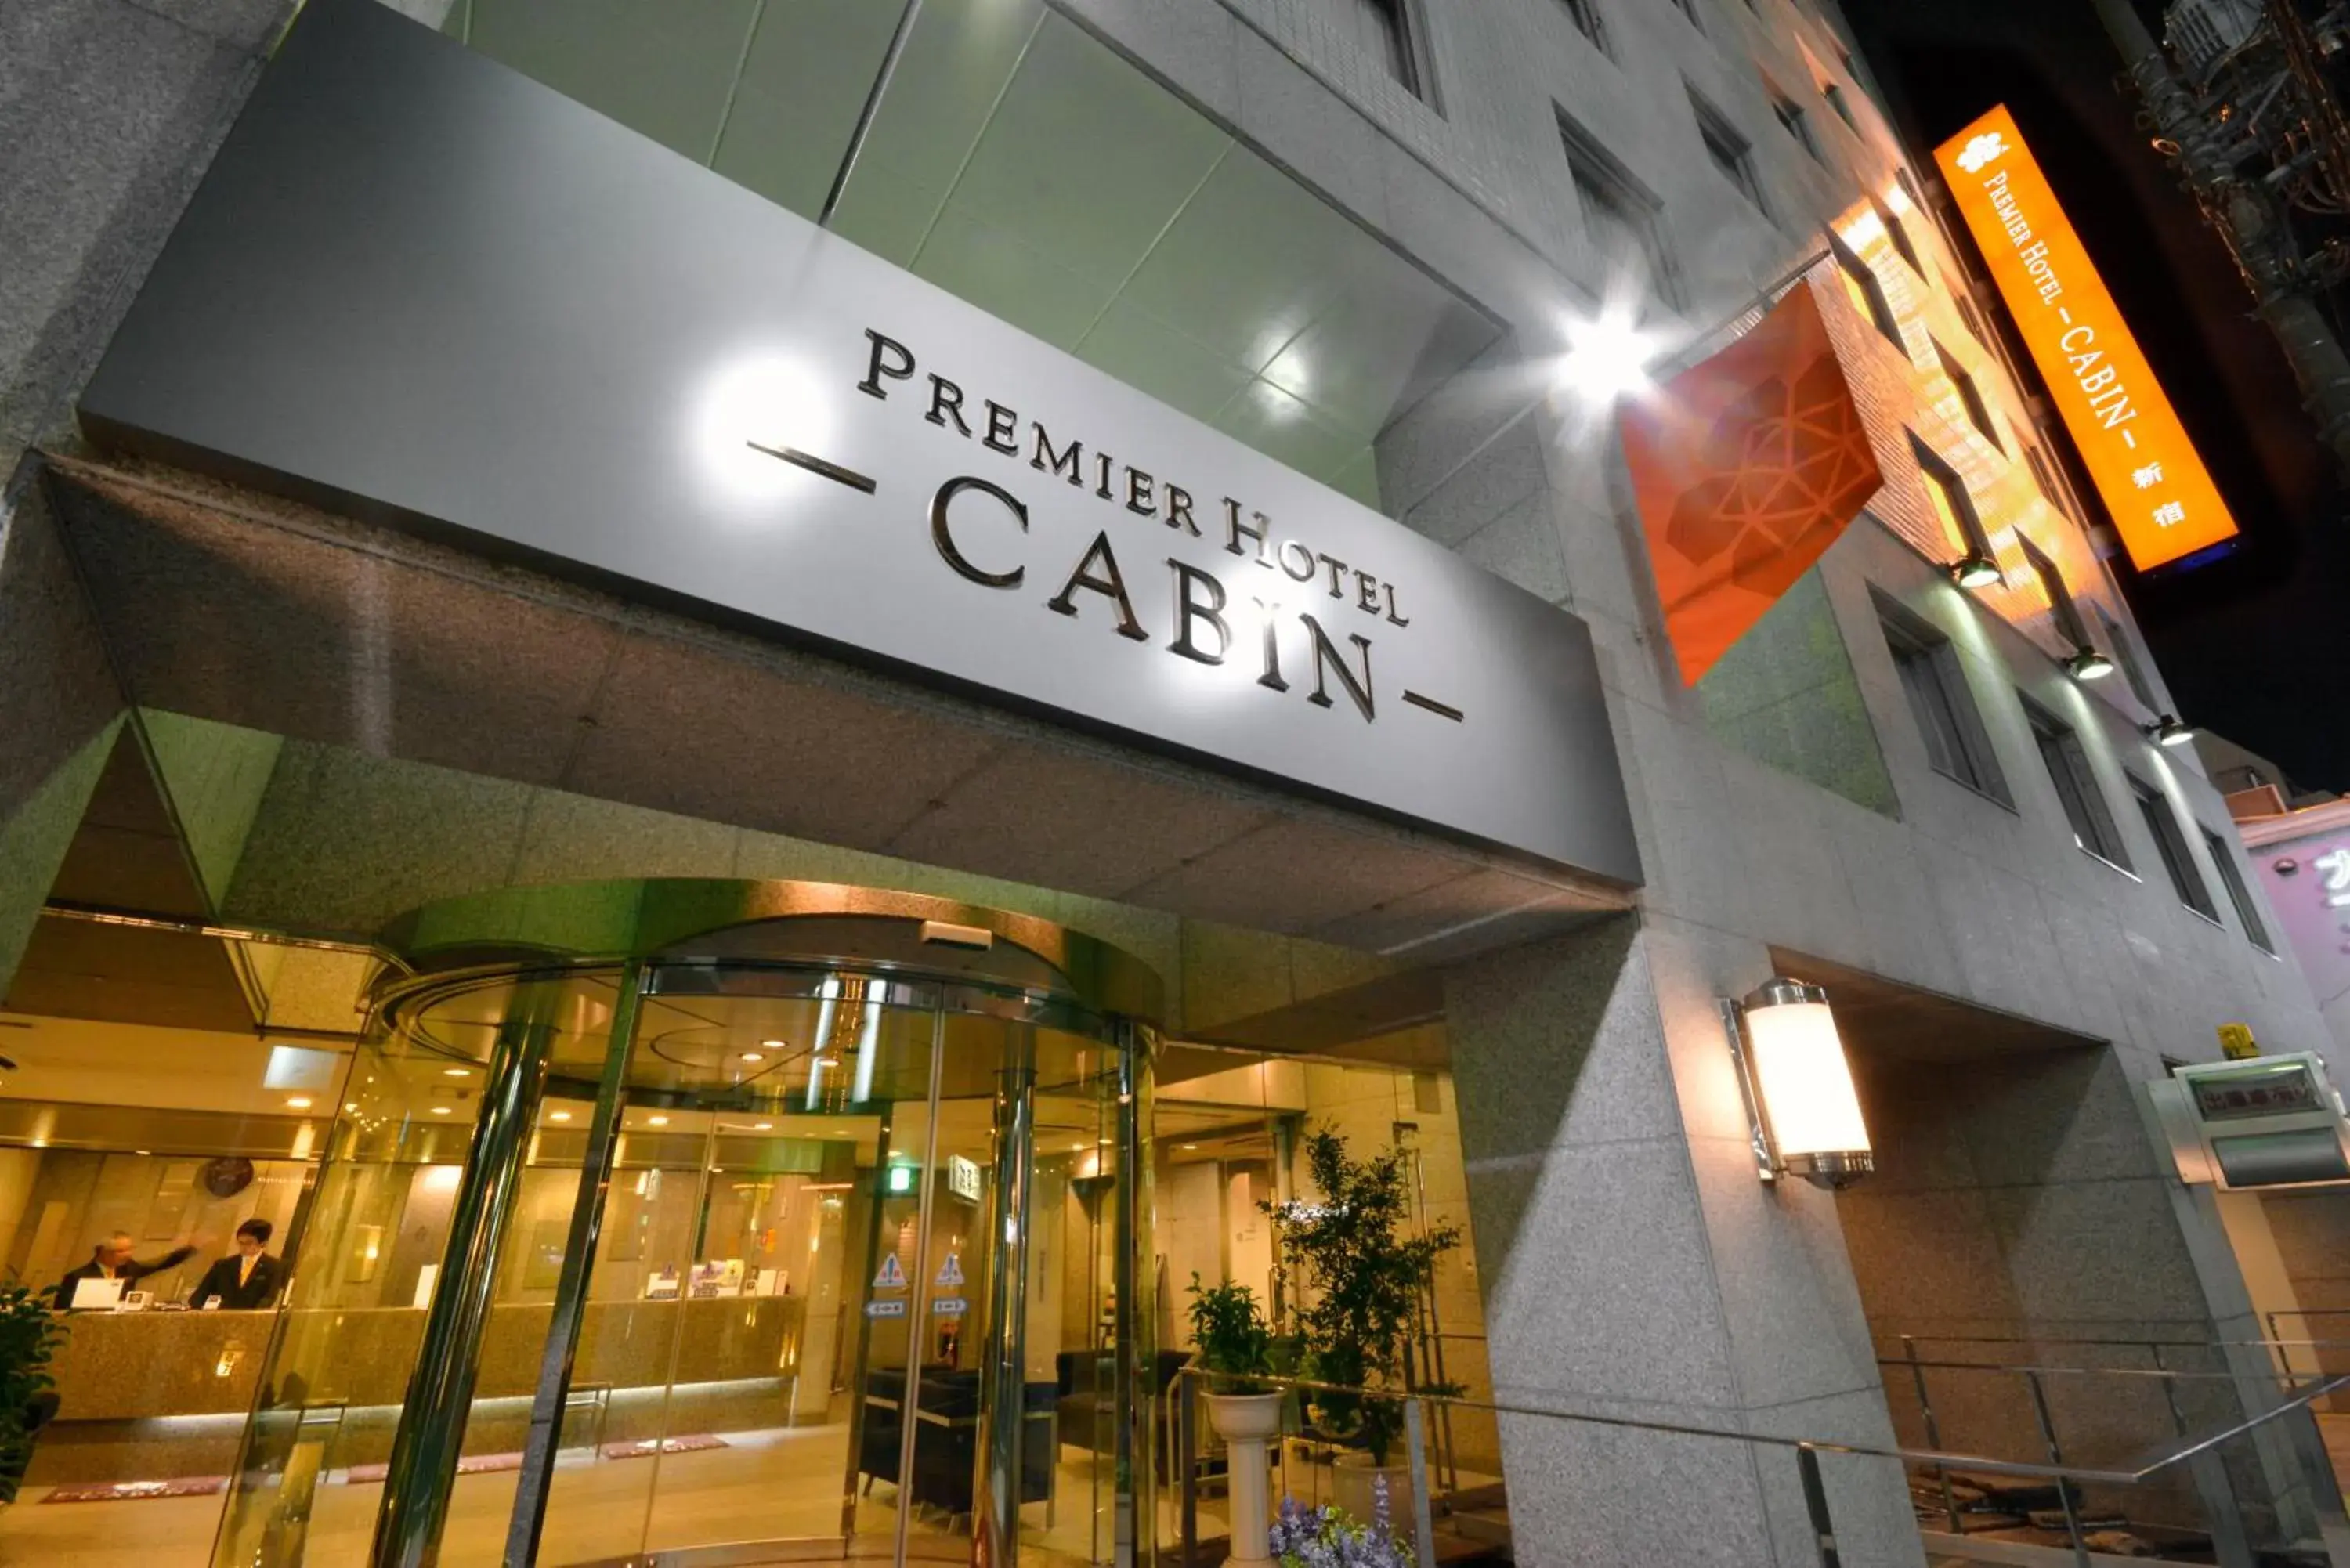 Facade/Entrance in Premier Hotel -Cabin - Shinjuku